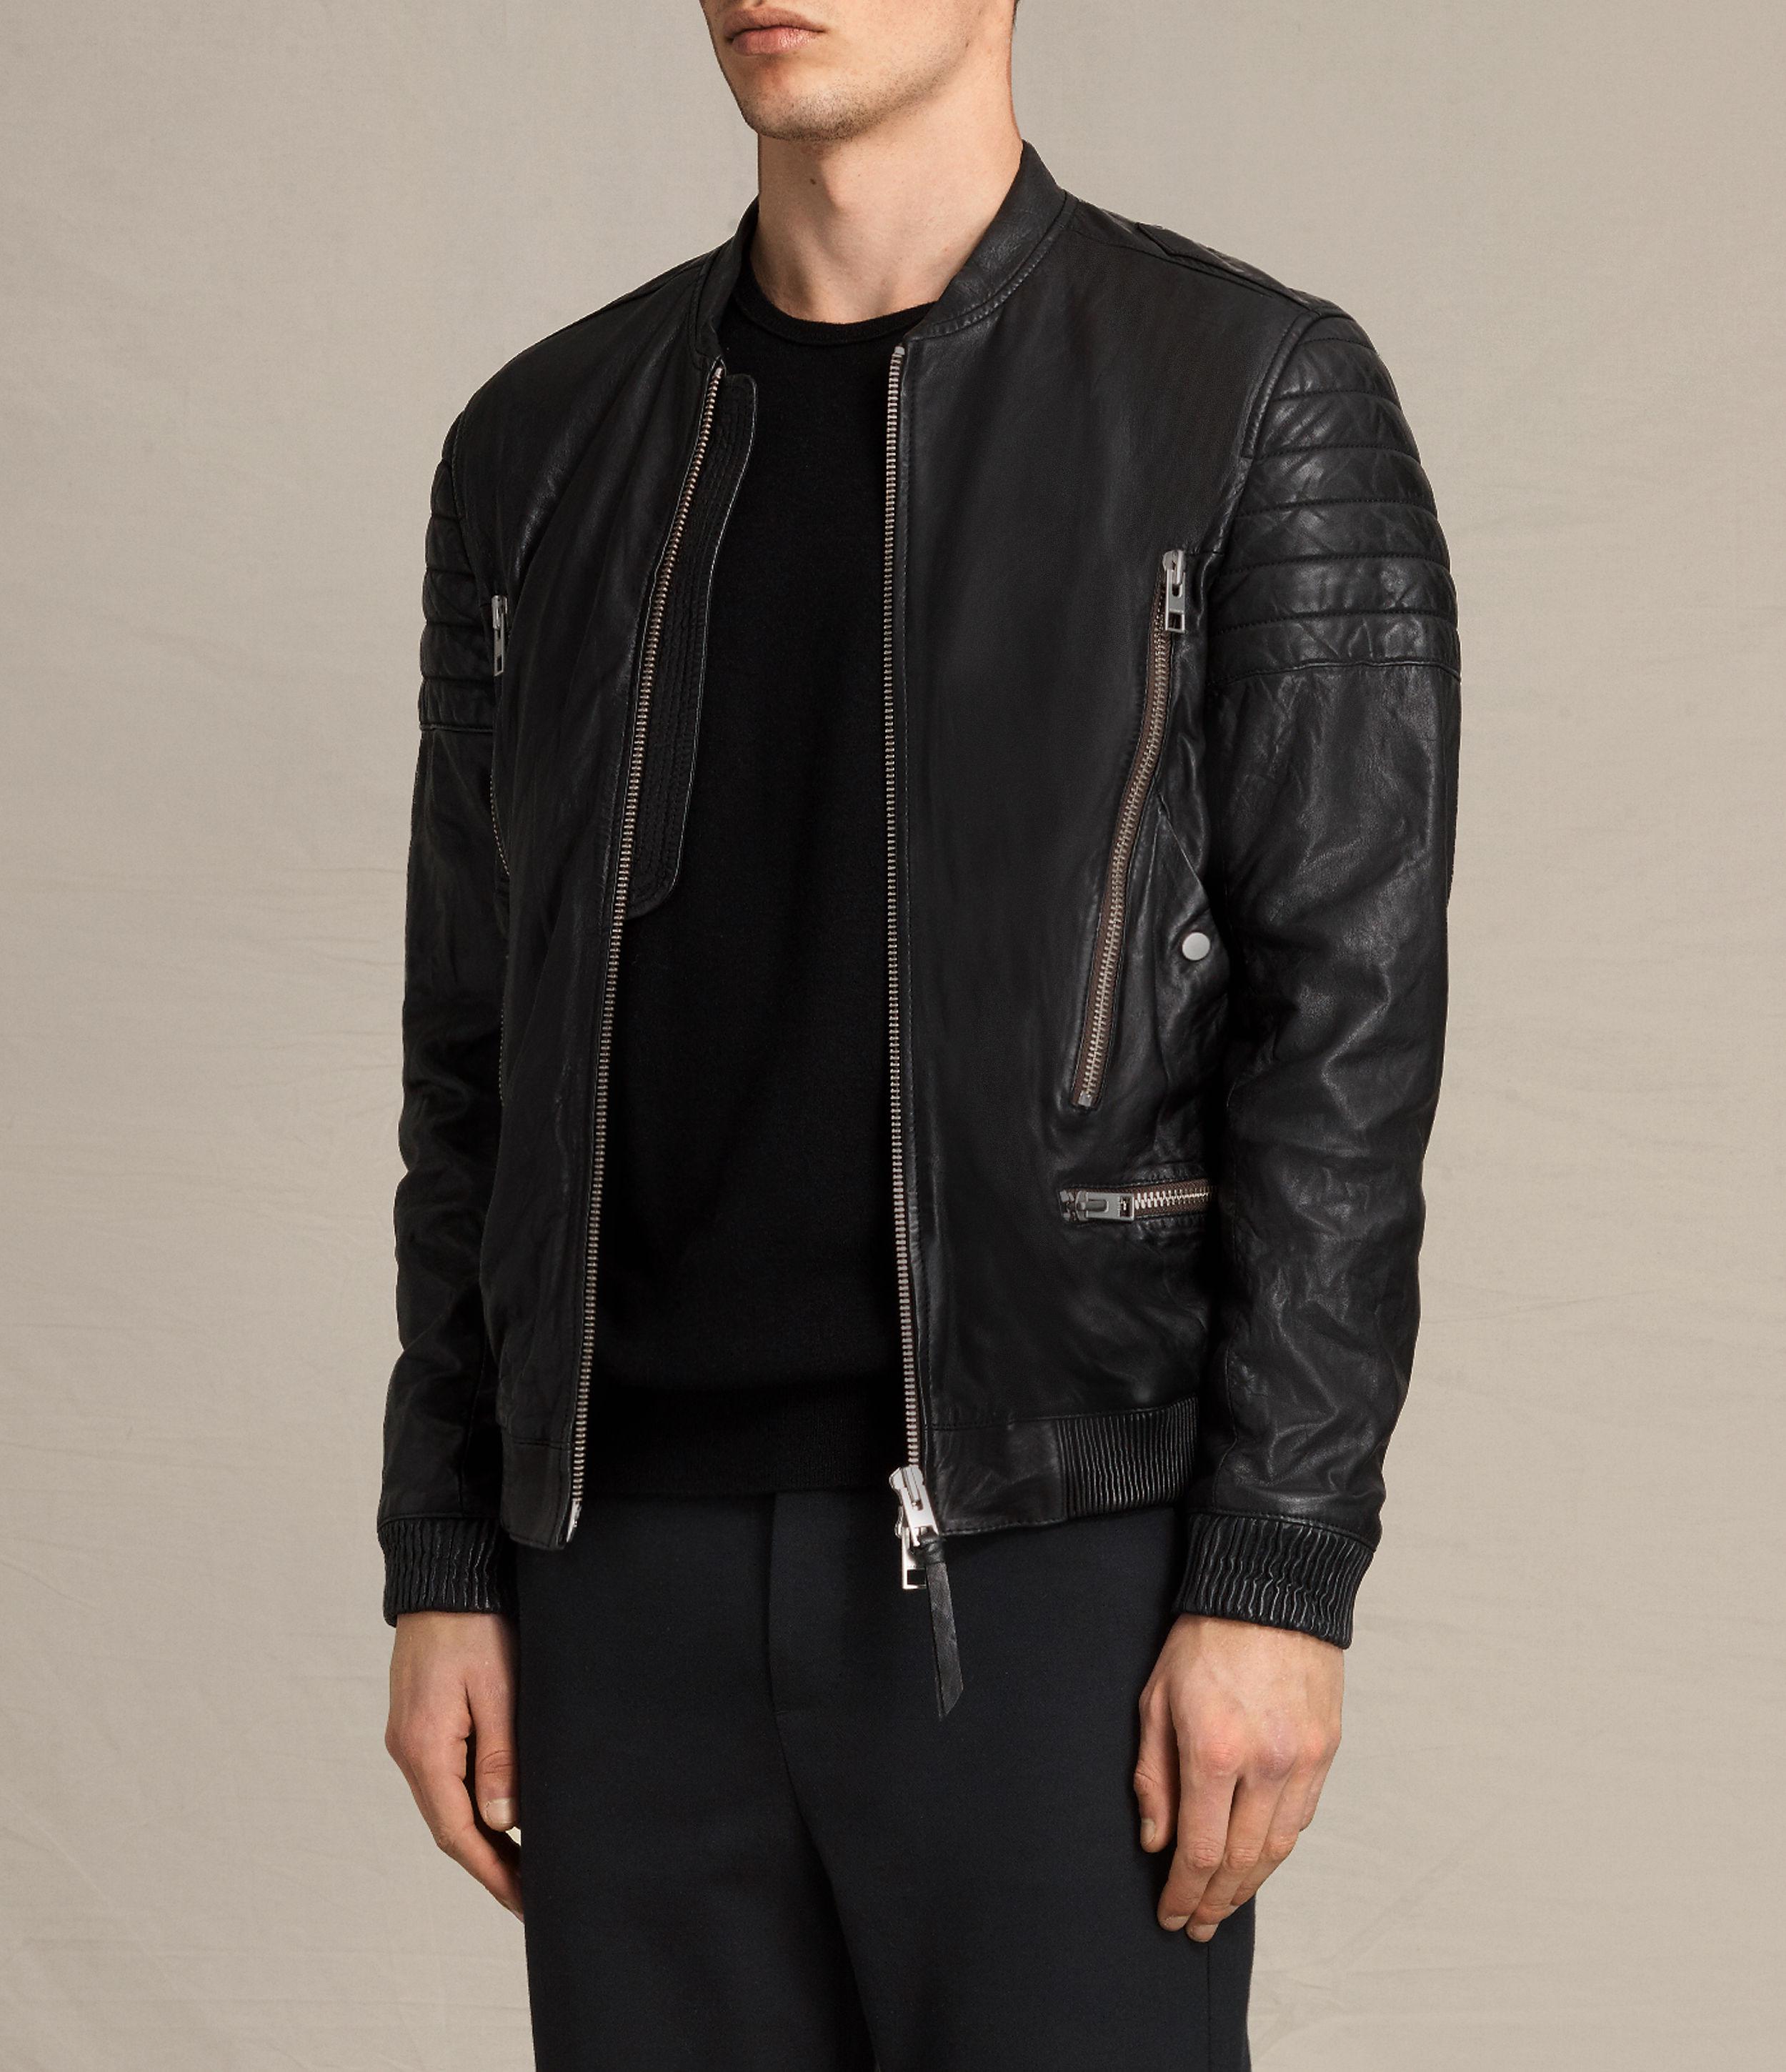 AllSaints Sanderson Leather Bomber Jacket in Black for Men - Lyst